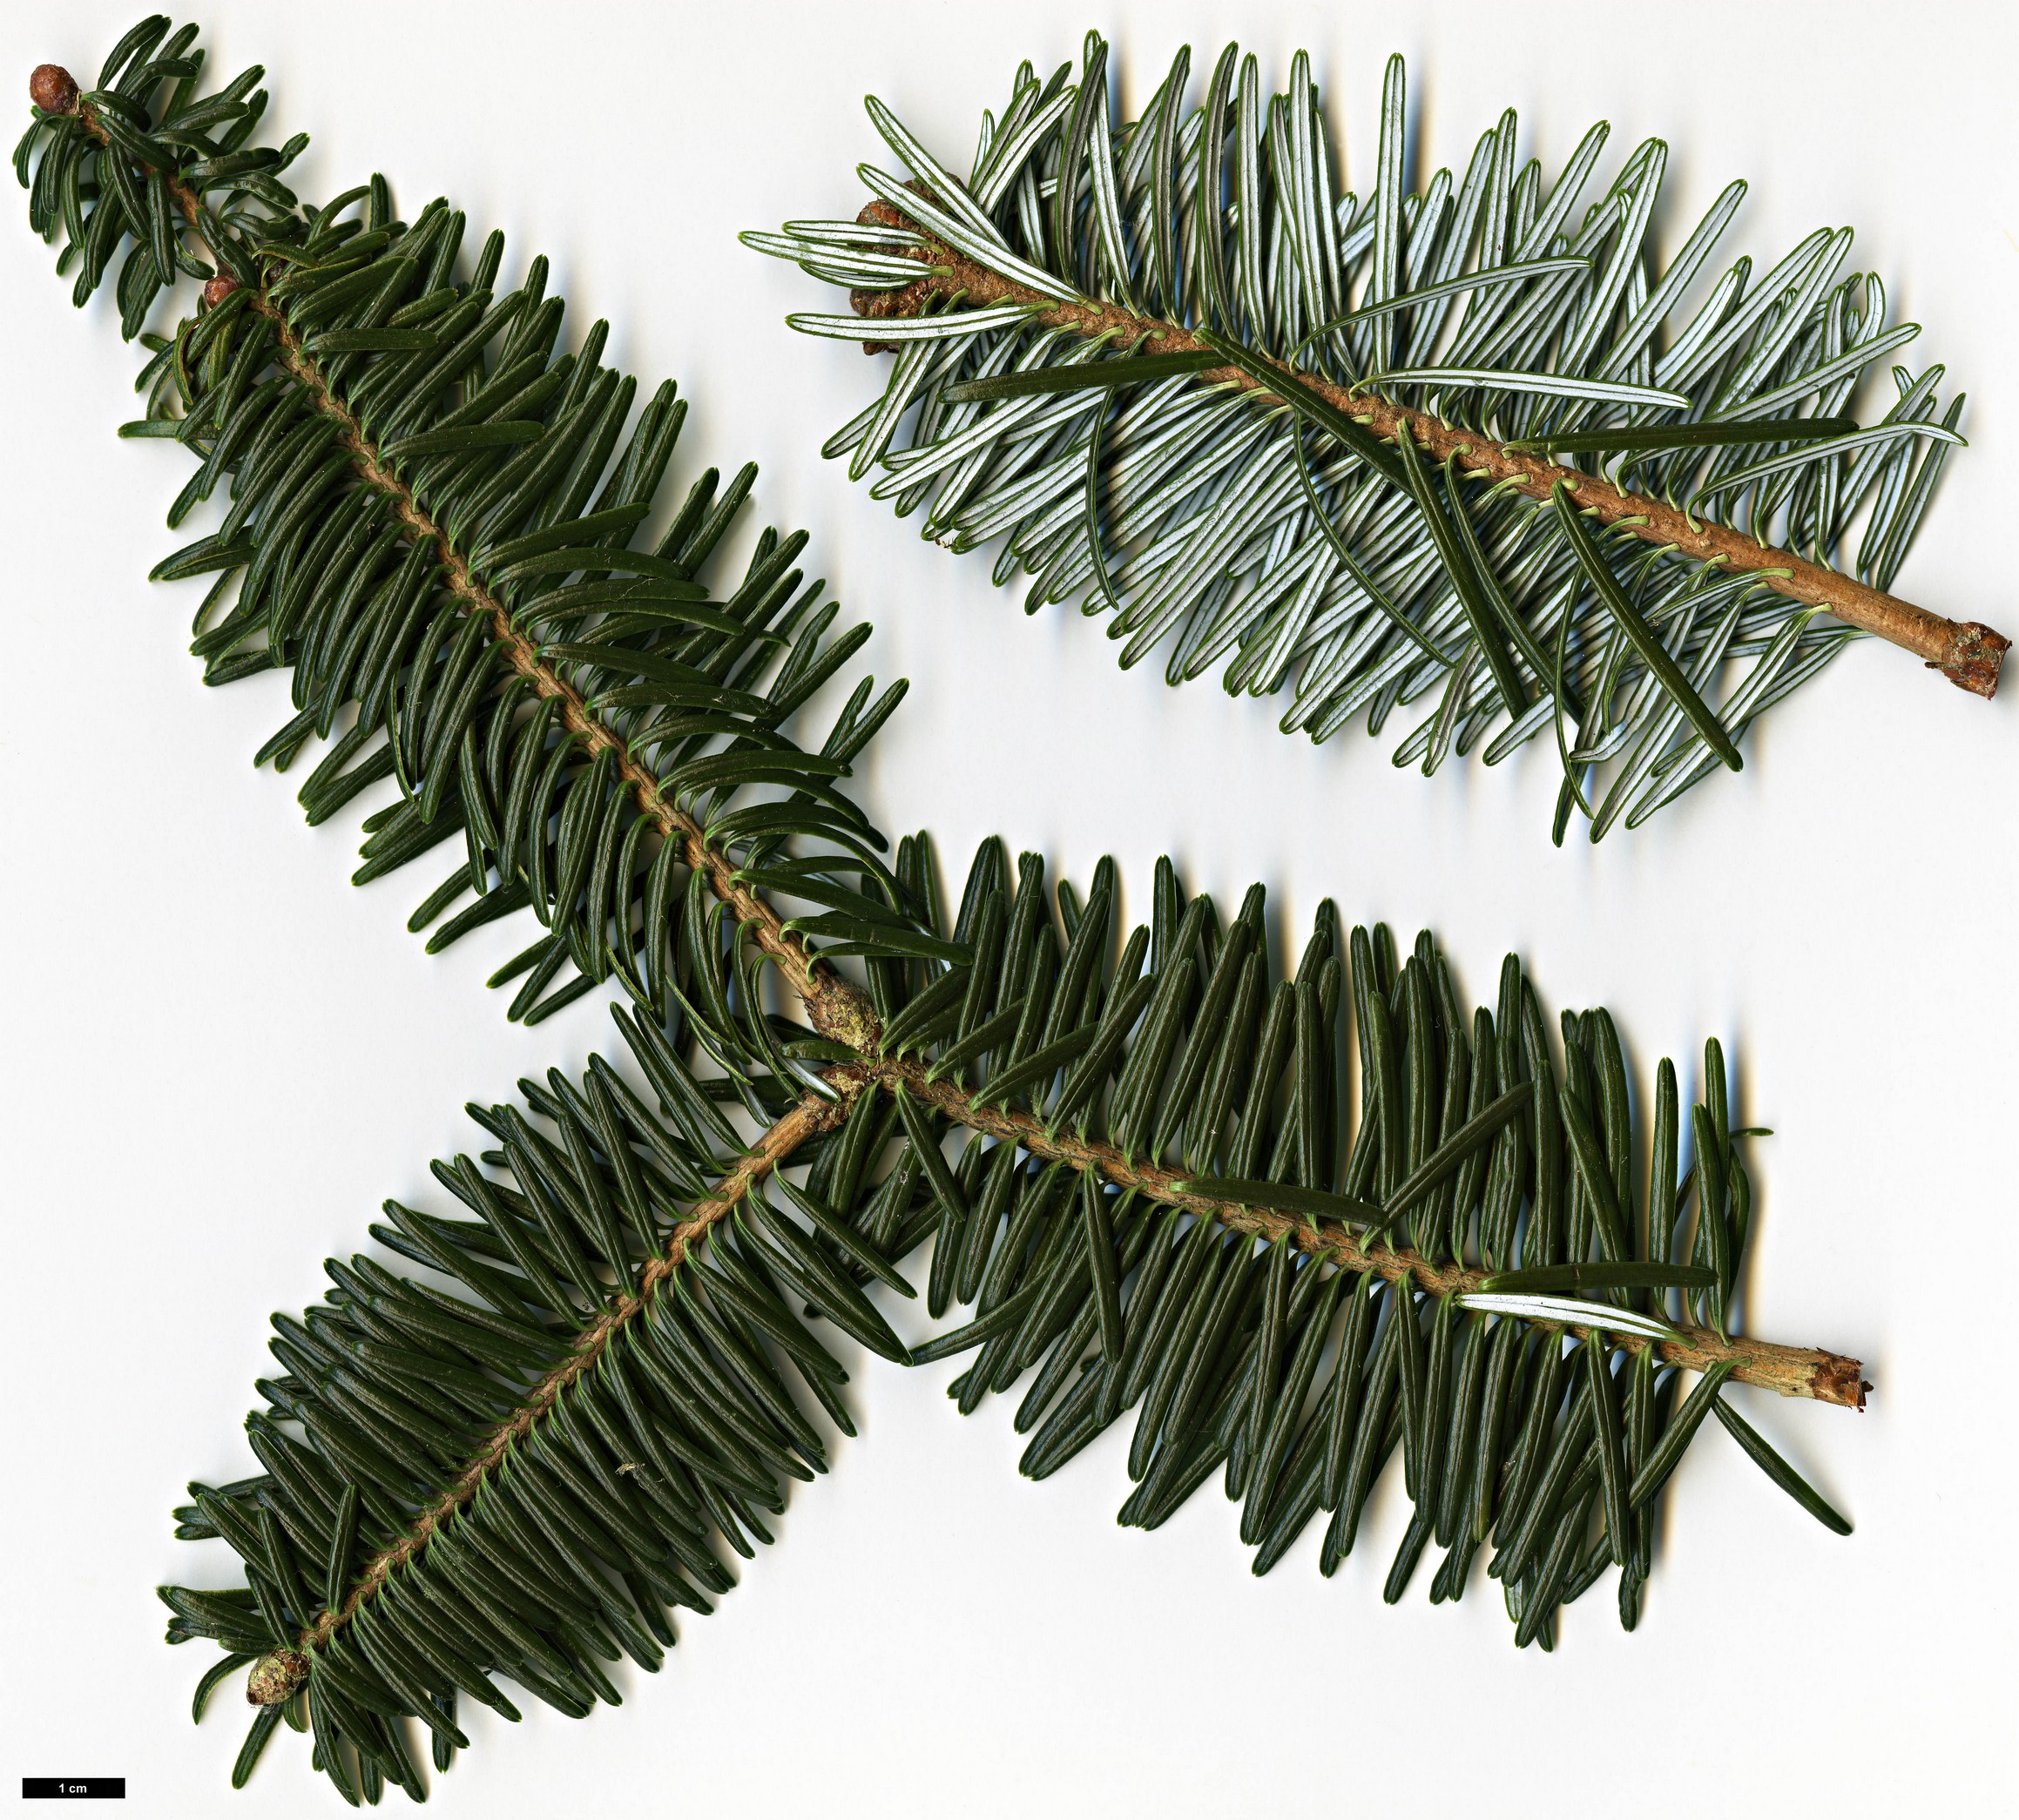 High resolution image: Family: Pinaceae - Genus: Abies - Taxon: delavayi - SpeciesSub: var. nukiangensis